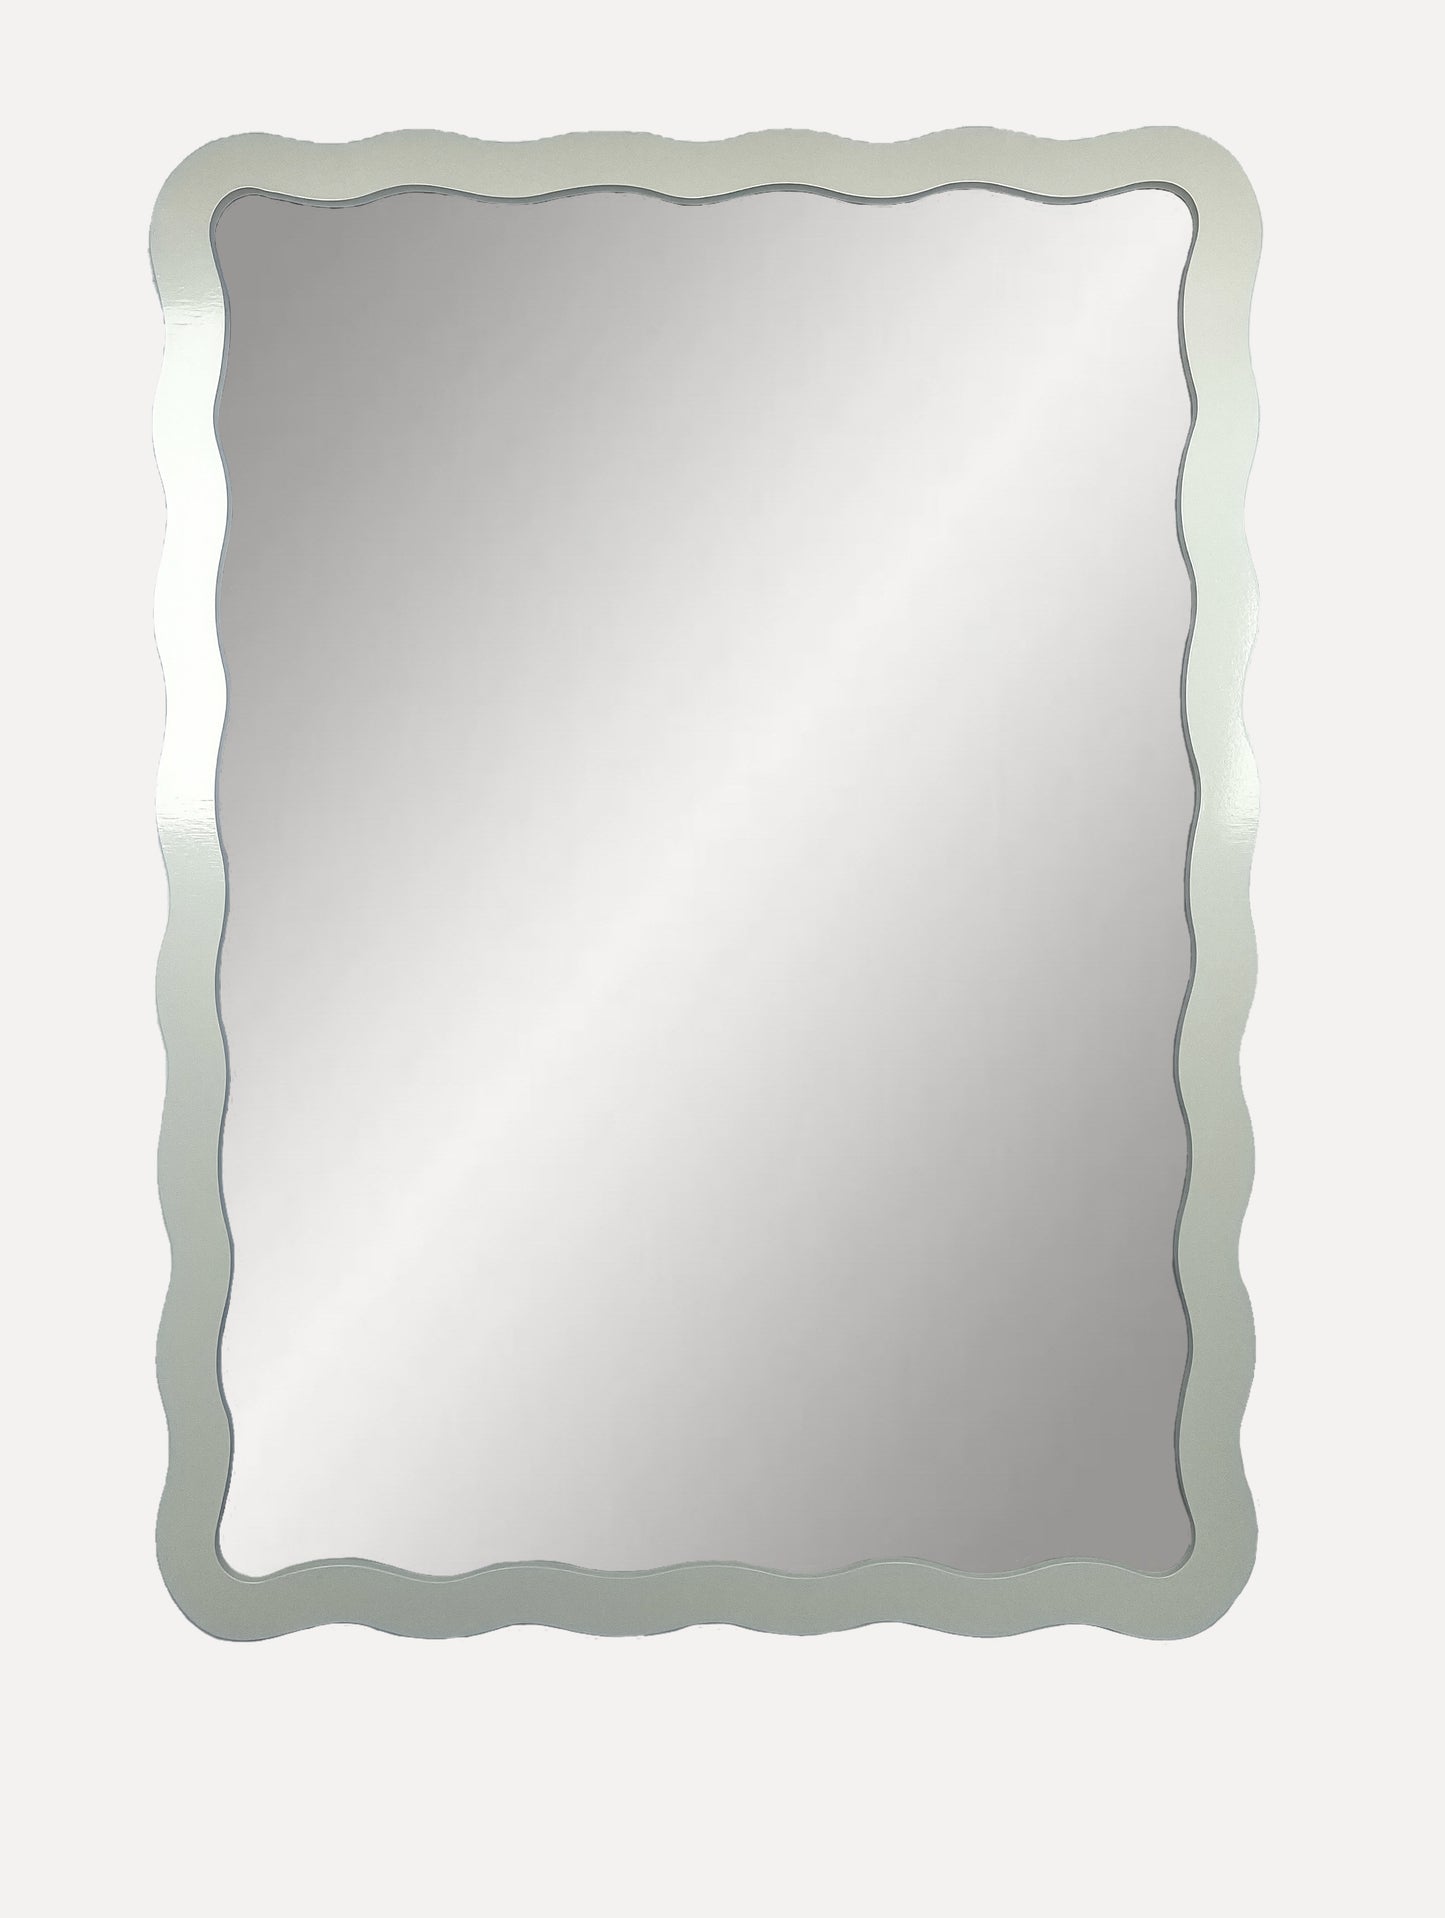 Soft White Large Shimmy Mirror